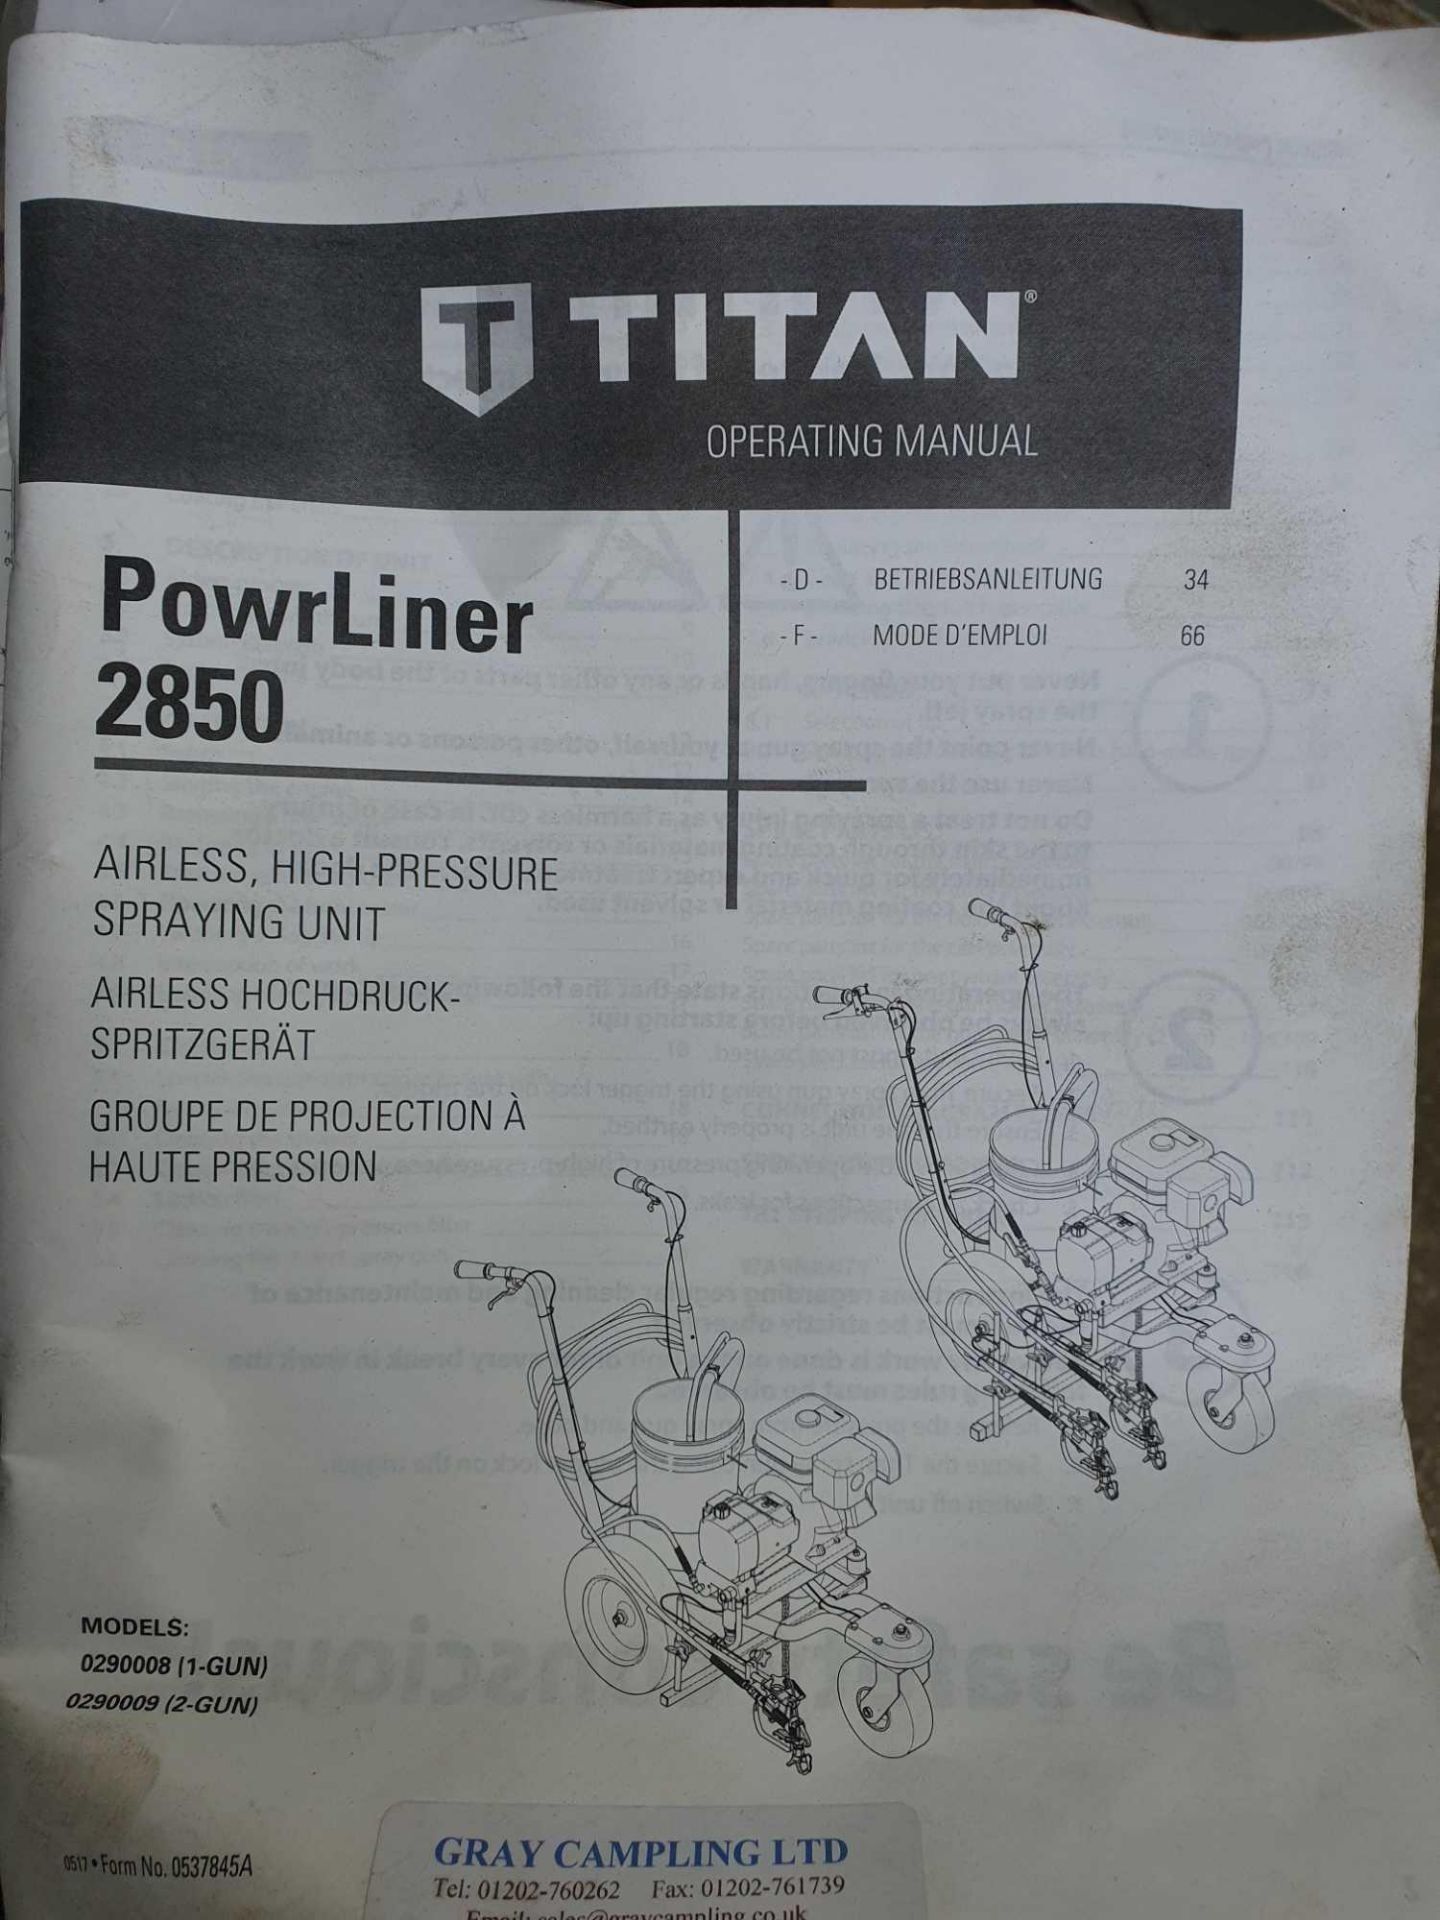 Titan powrliner 2850 - Image 3 of 3